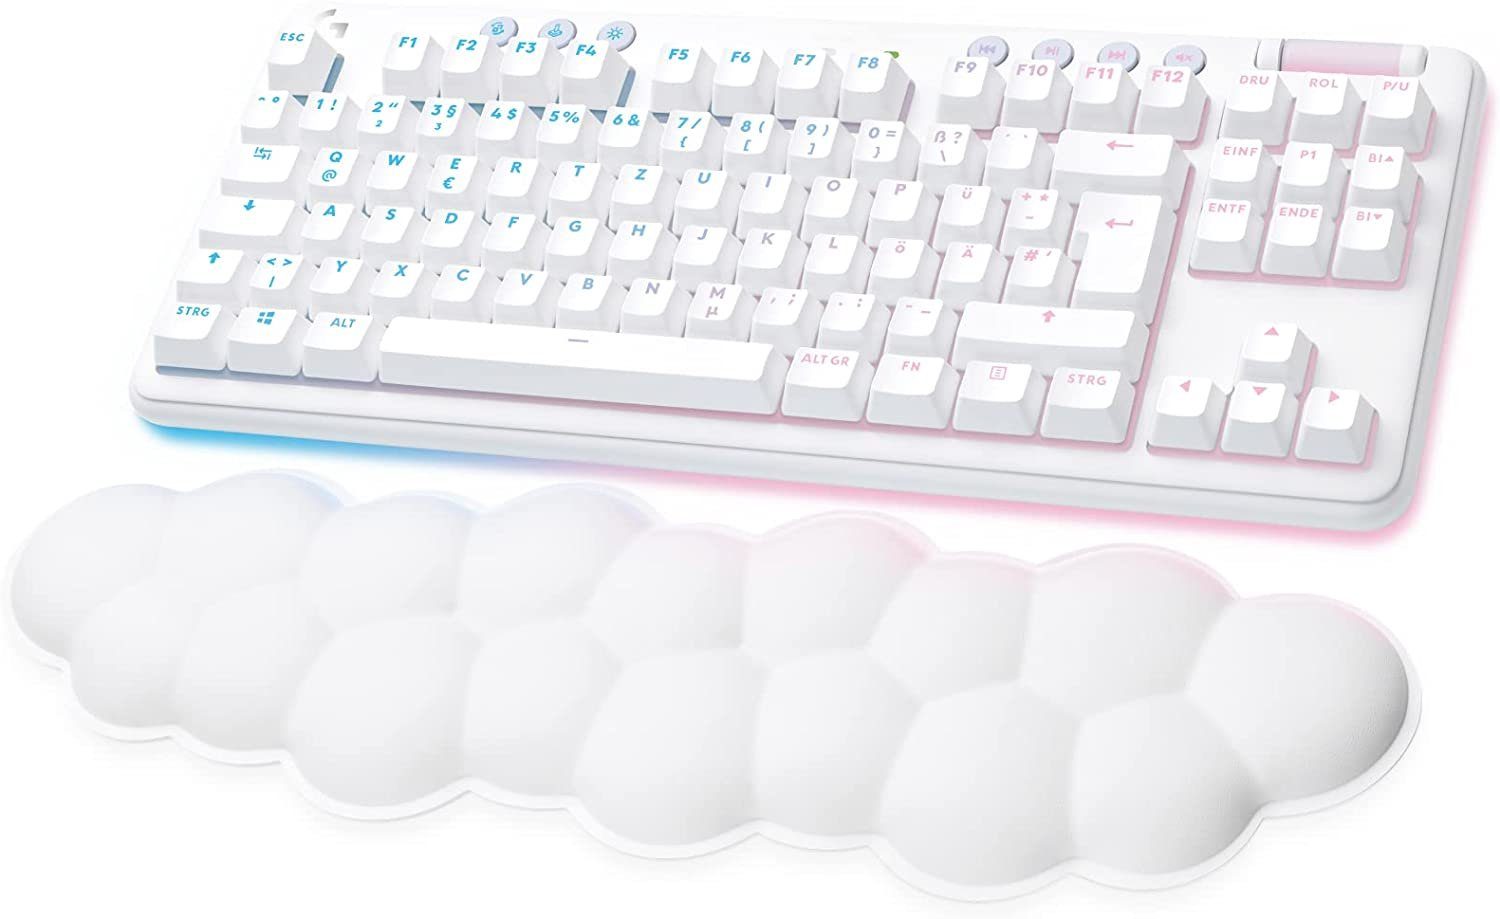 Logitech G G715 Wireless Gaming Keyboard - OFF WHITE - DEU - CENTRAL Gaming-Tastatur